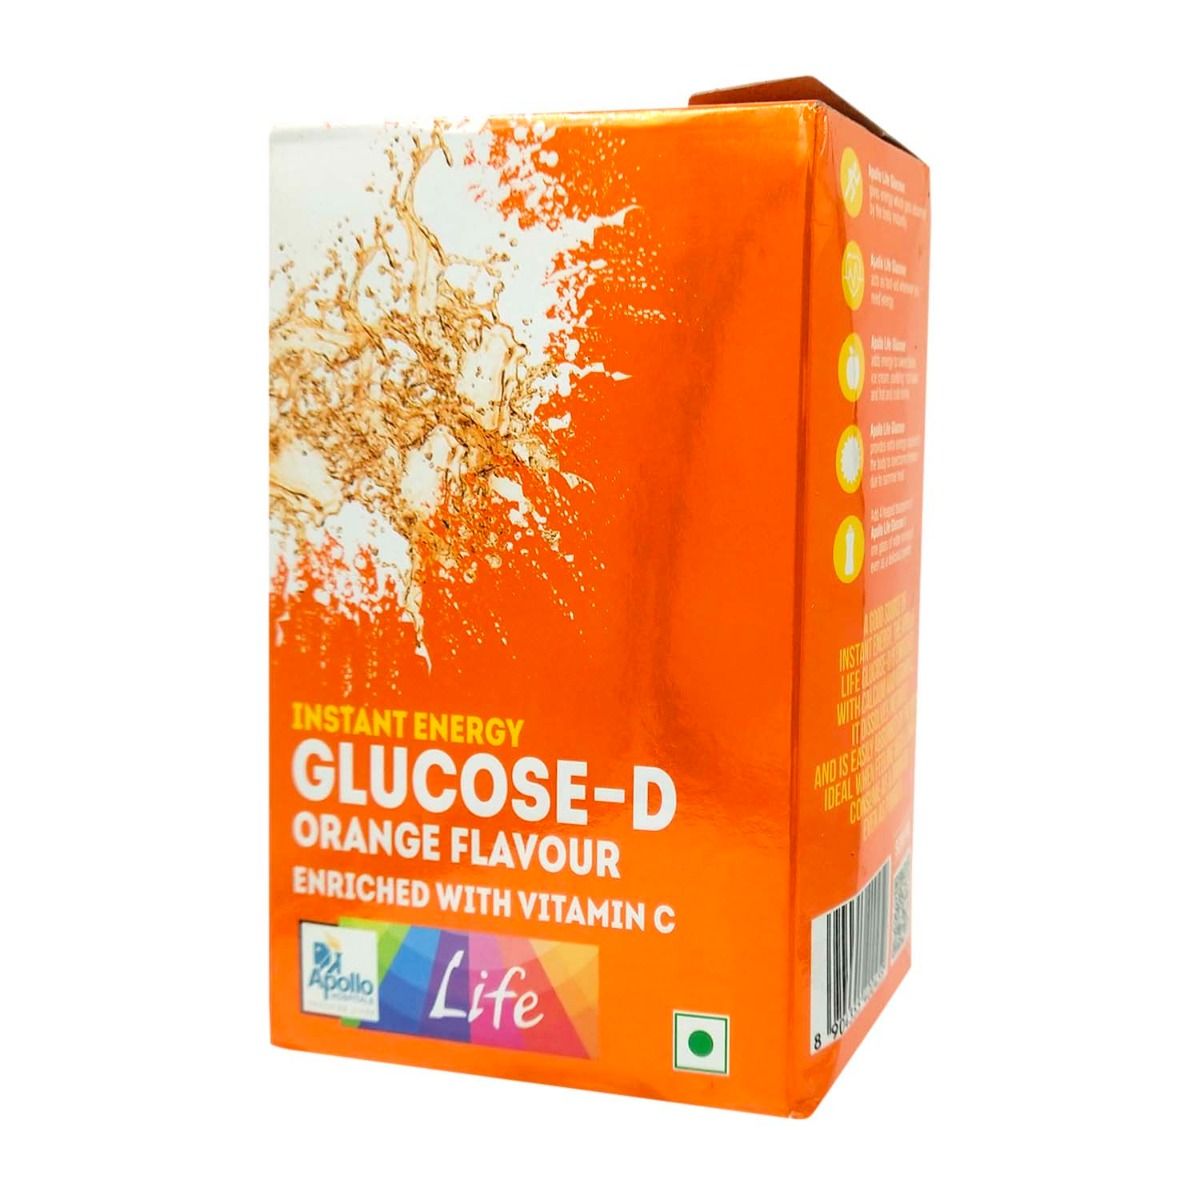 Buy Apollo Life Glucose-D Instant Energy Orange Flavour Drink, 500 gm Online